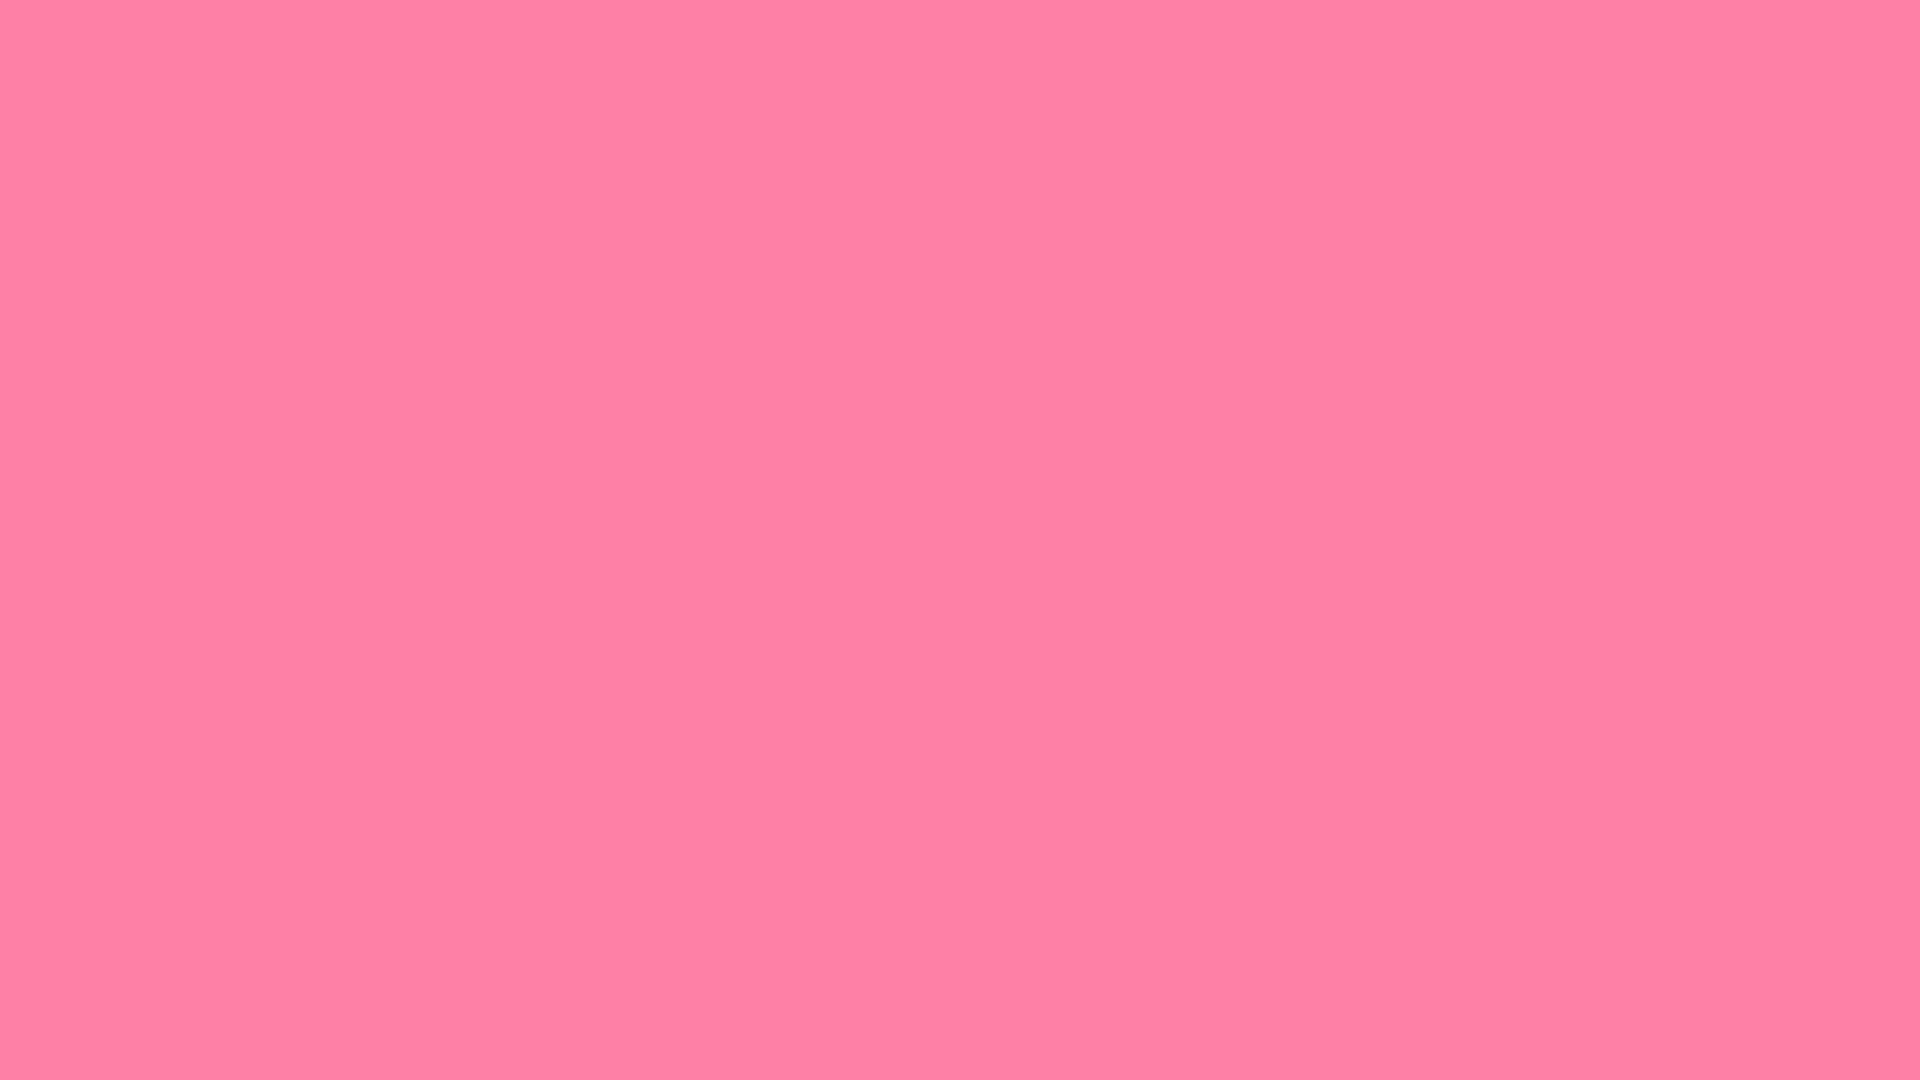 Eco Plain Mottled Light Blush Pink Paste the Wall Free Match Wallpaper |  DIY at B&Q